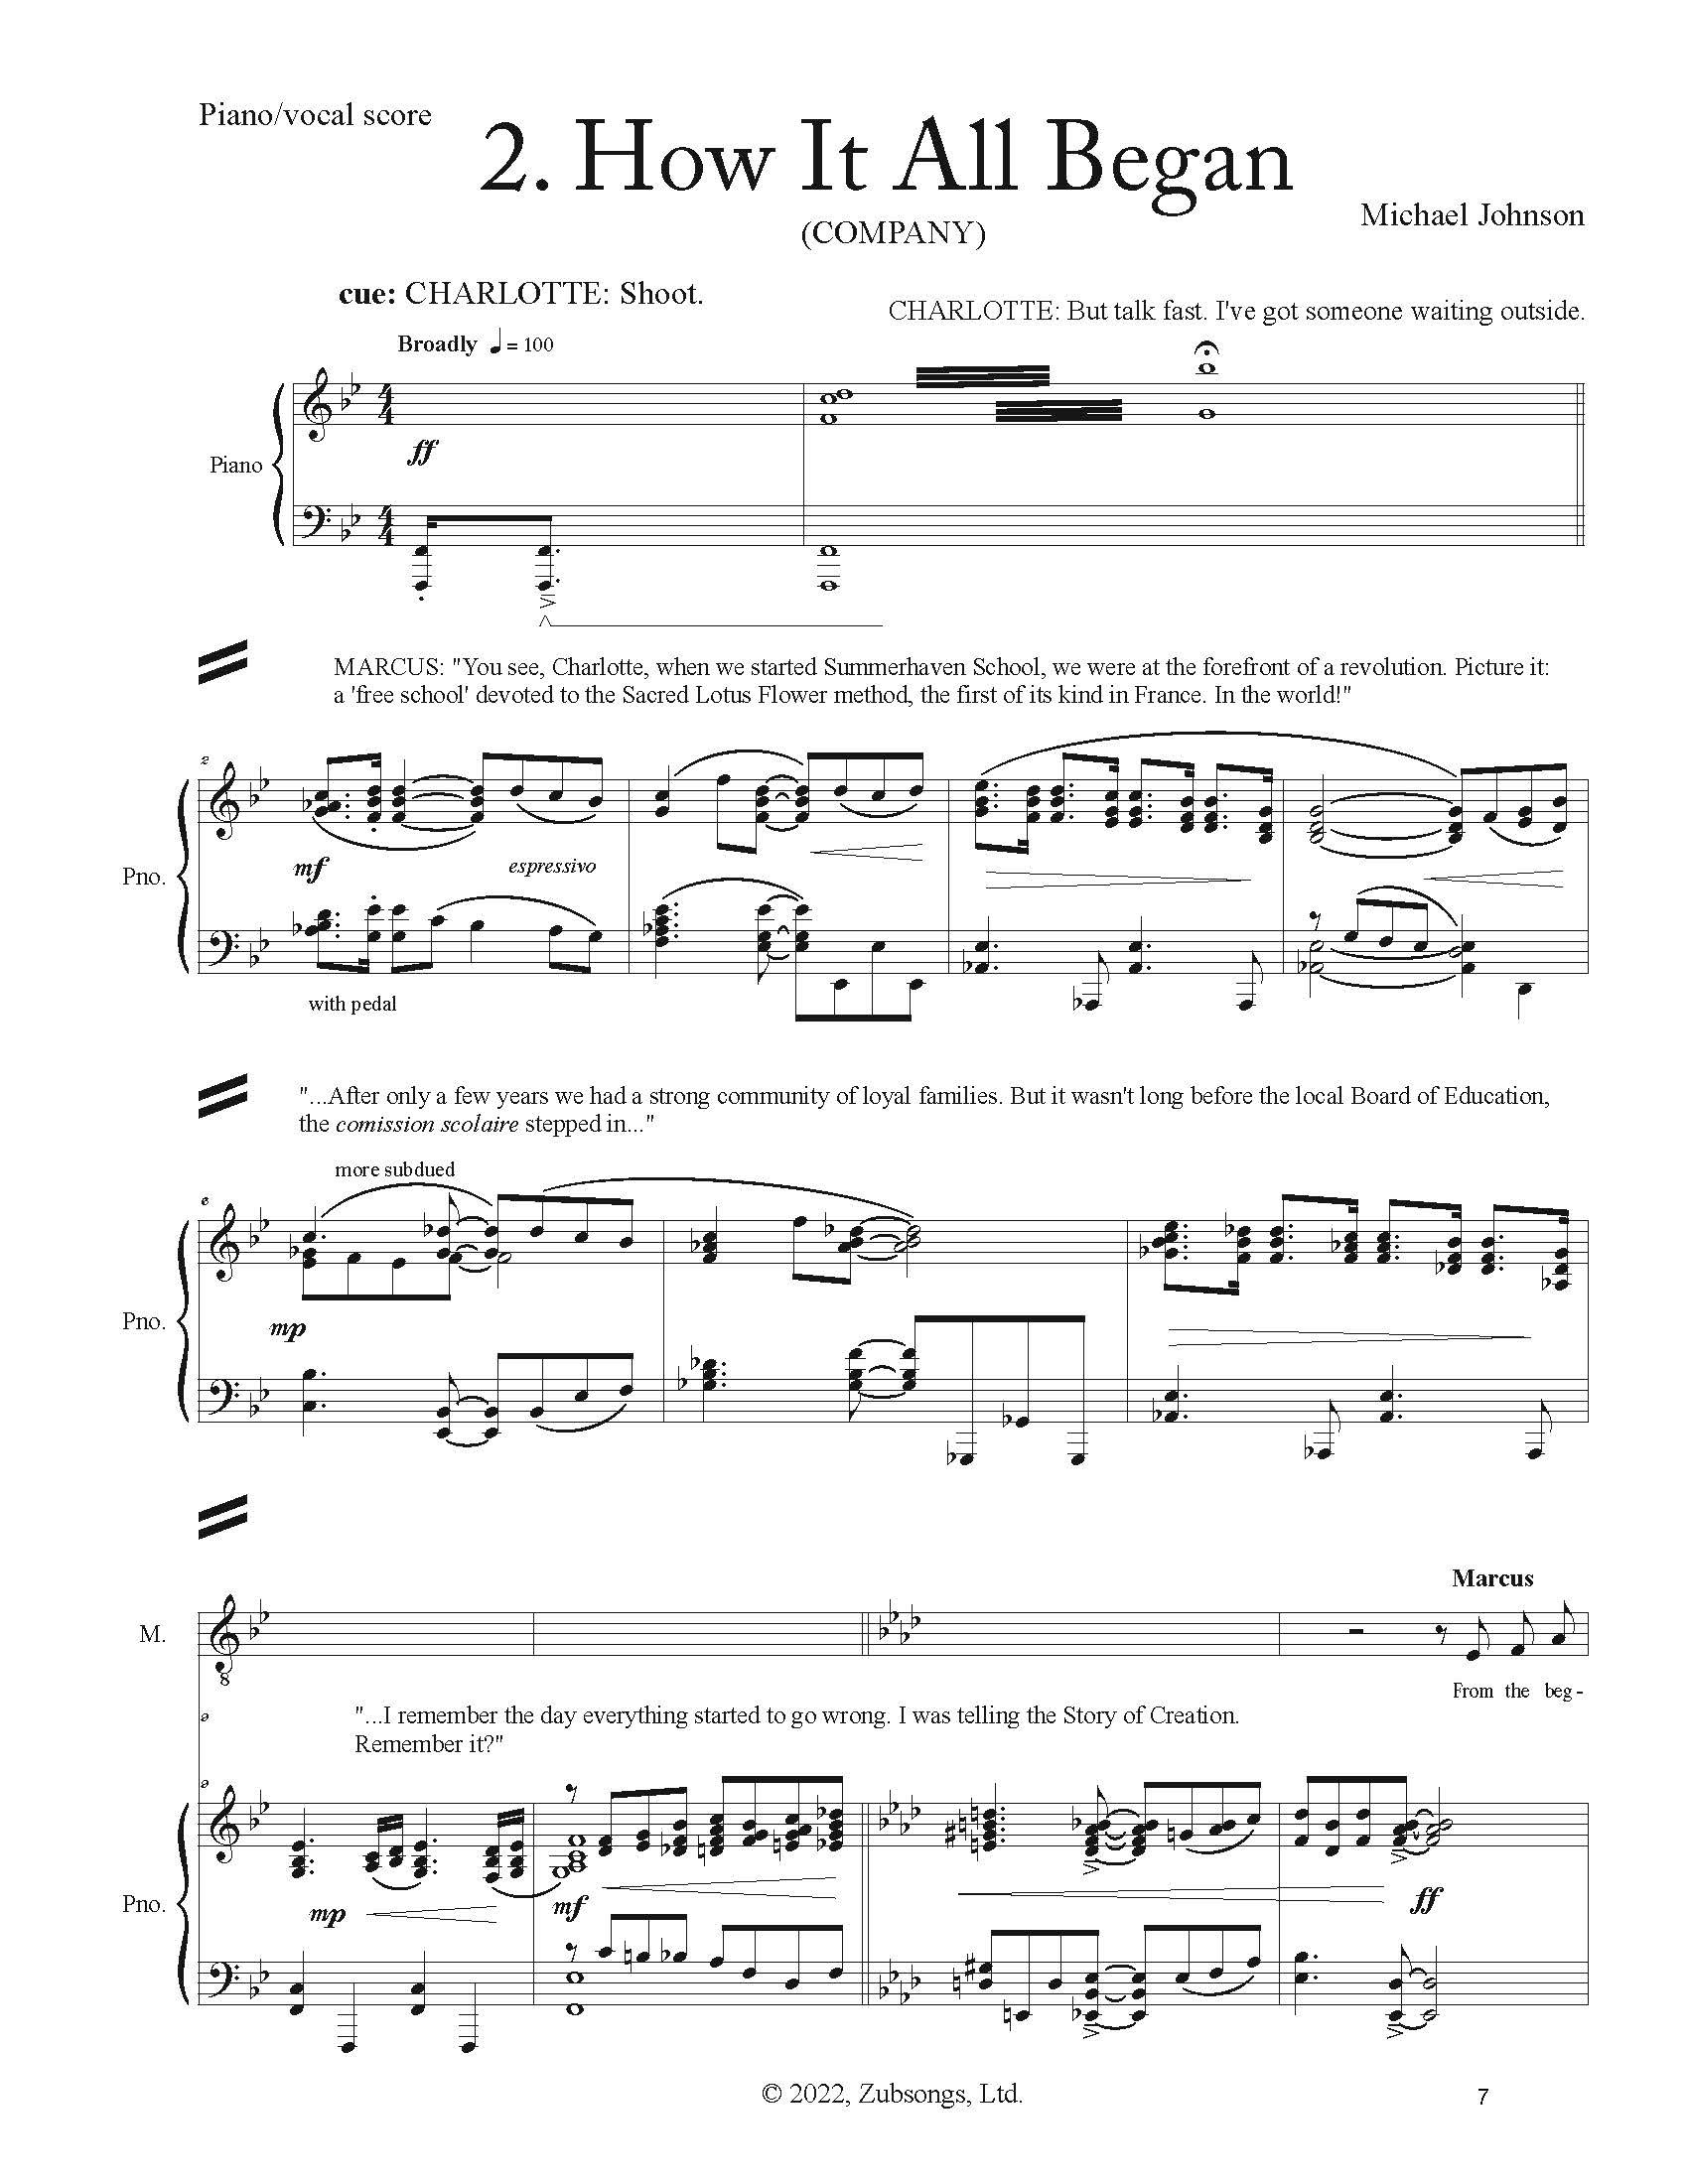 FULL PIANO VOCAL SCORE DRAFT 1 - Score_Page_007.jpg